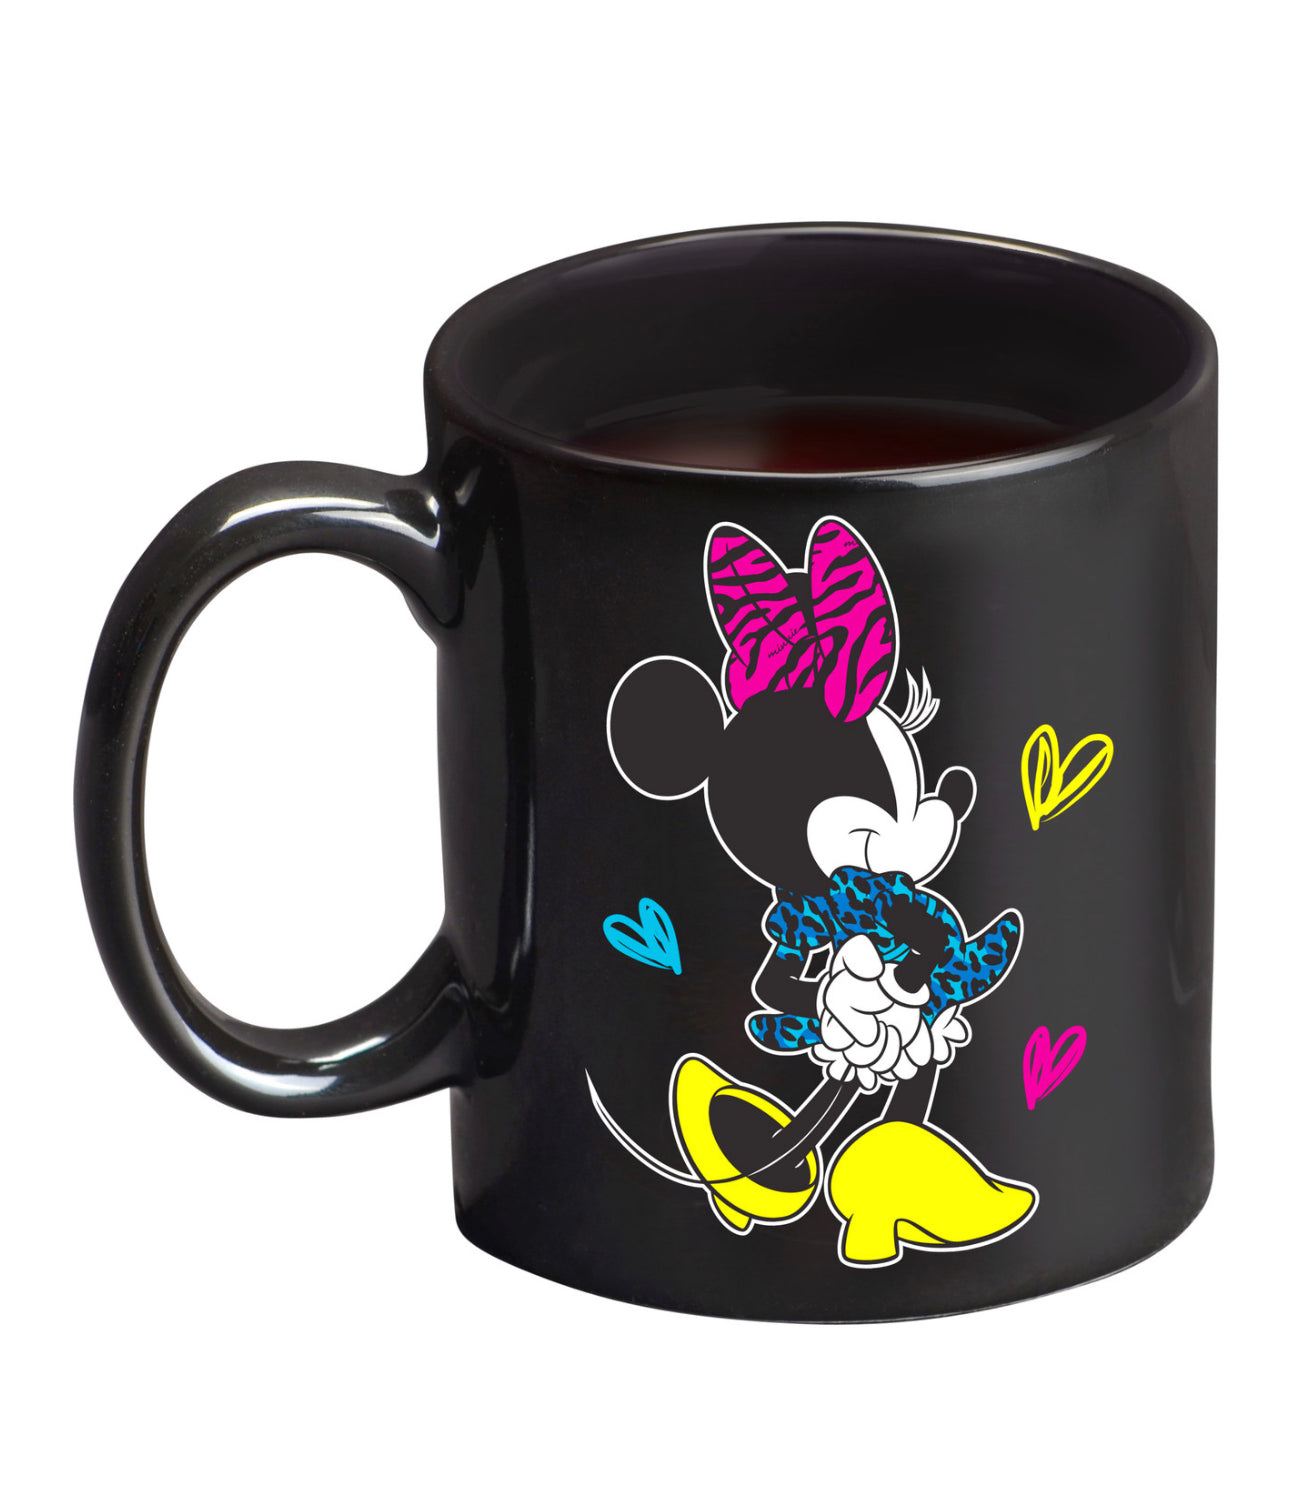 Minnie Mouse Mug Warmer with Mug